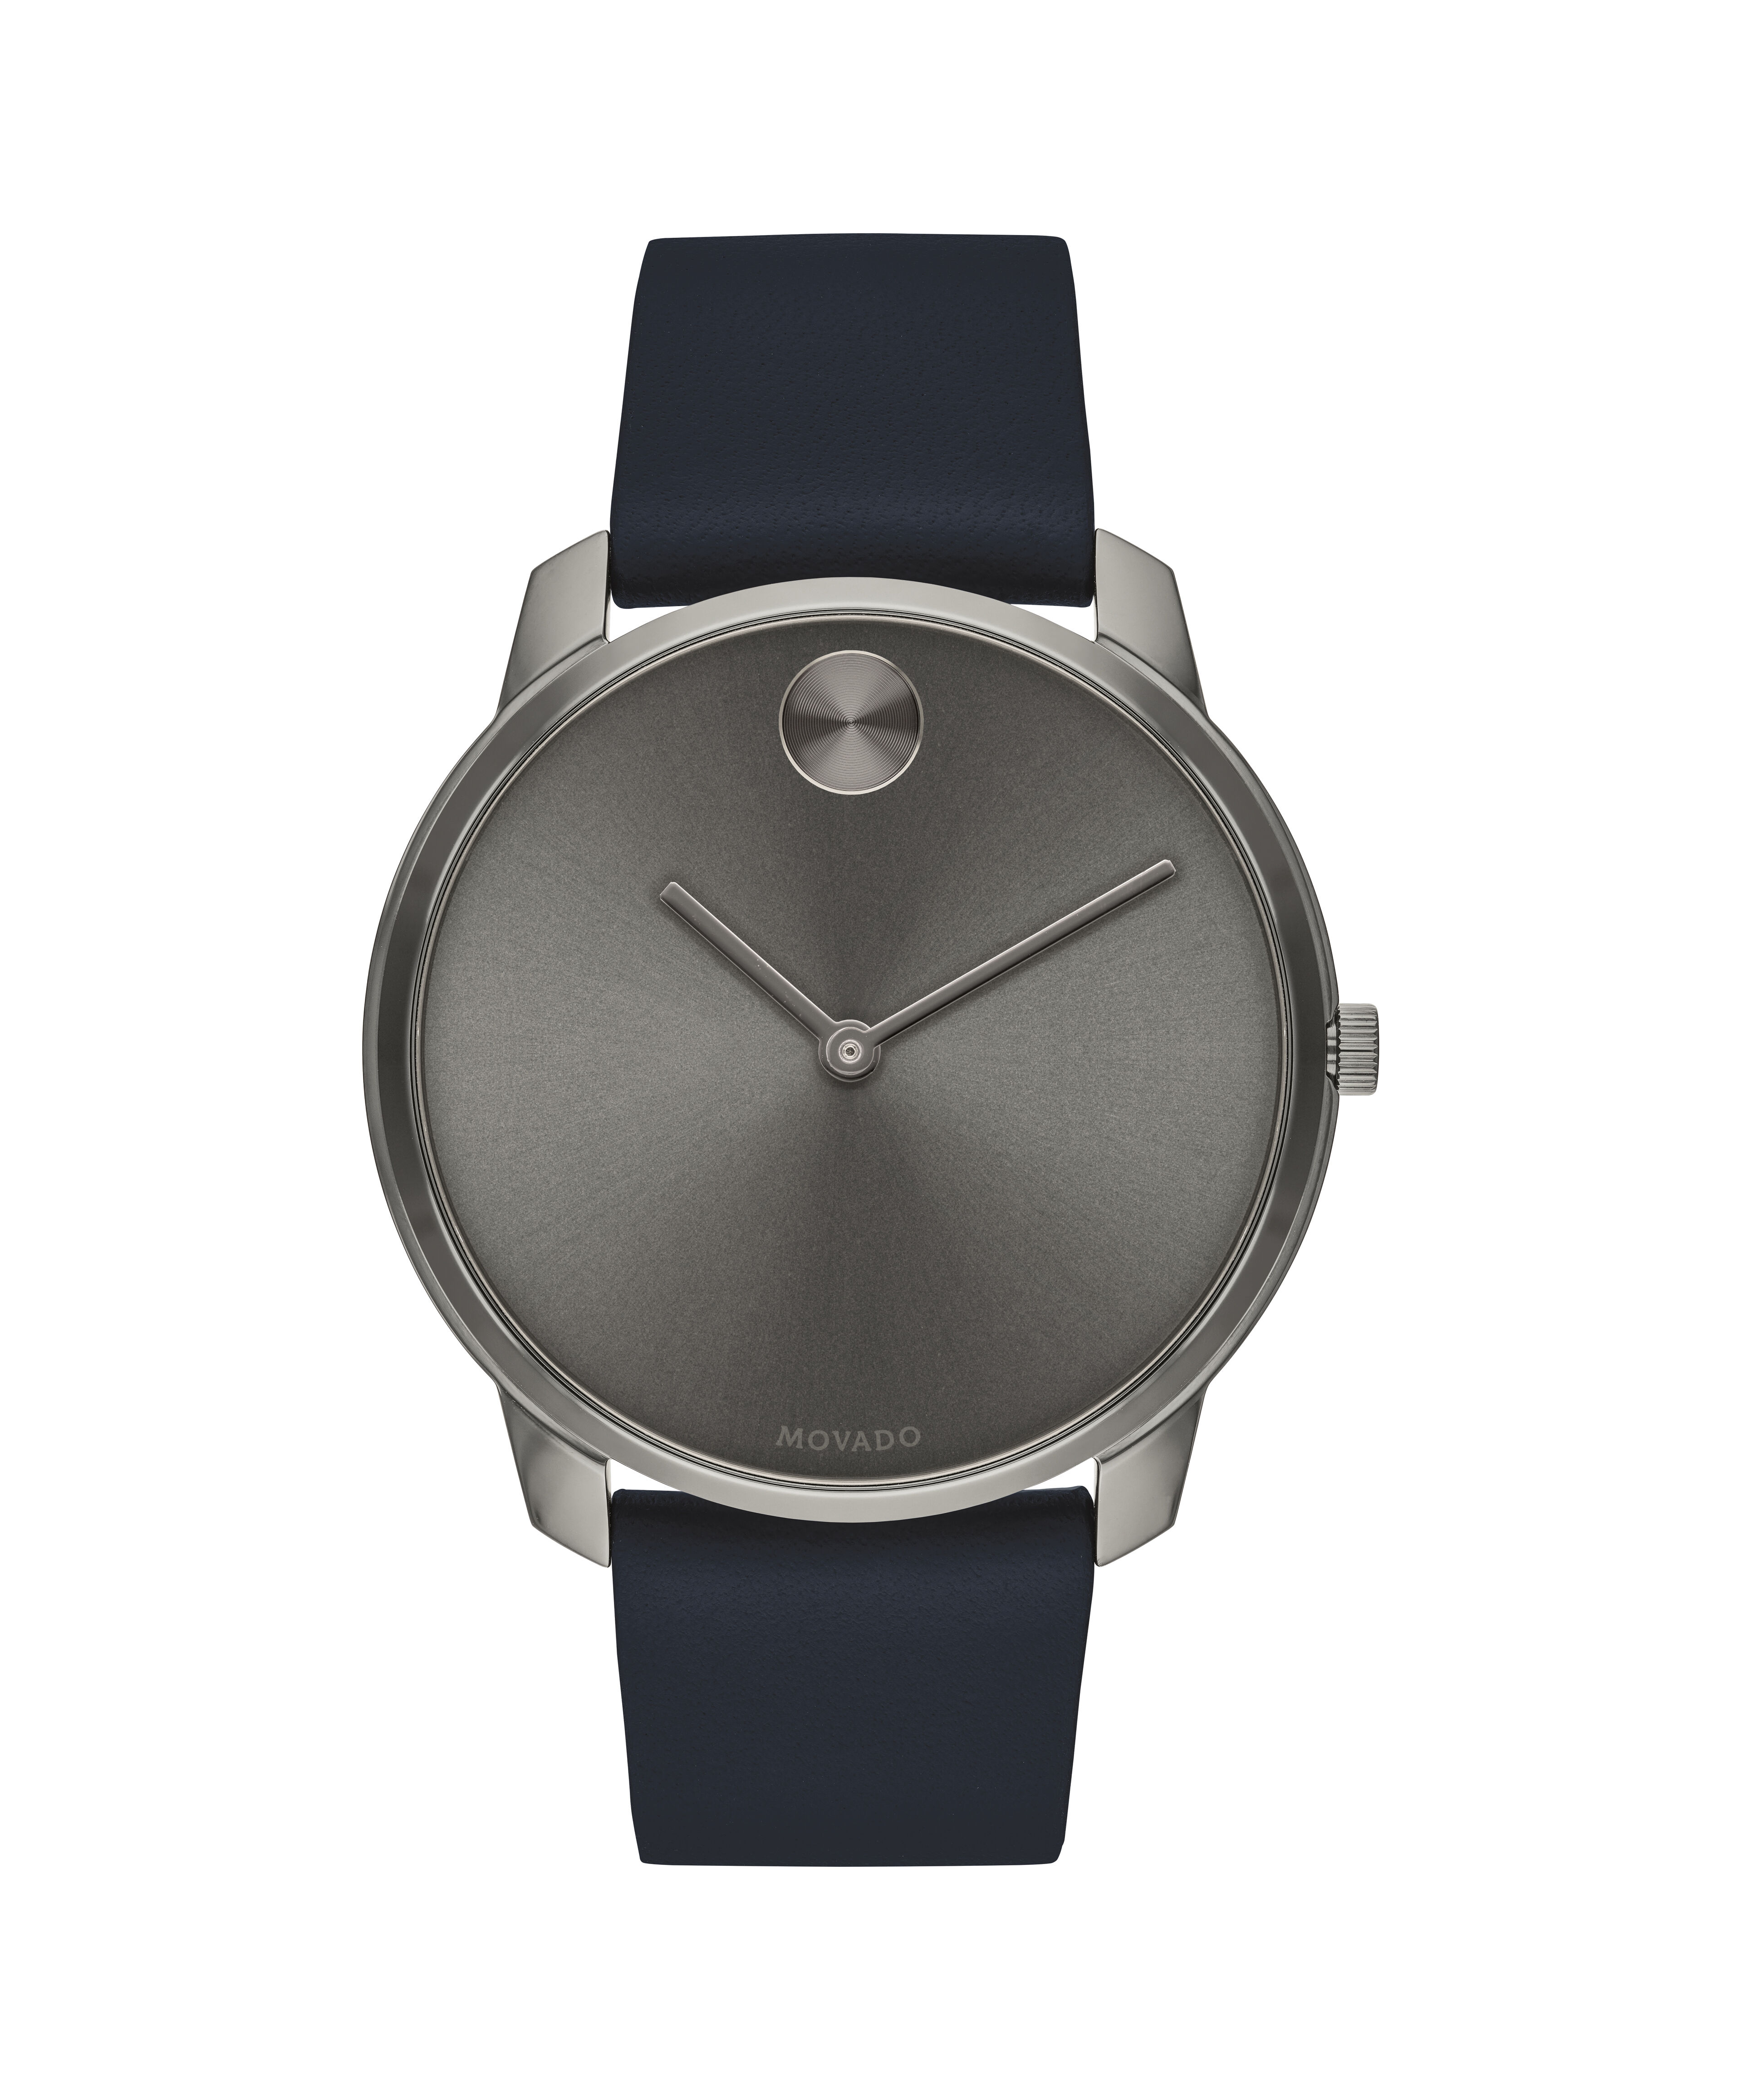 Designer Perfect Replica Watches